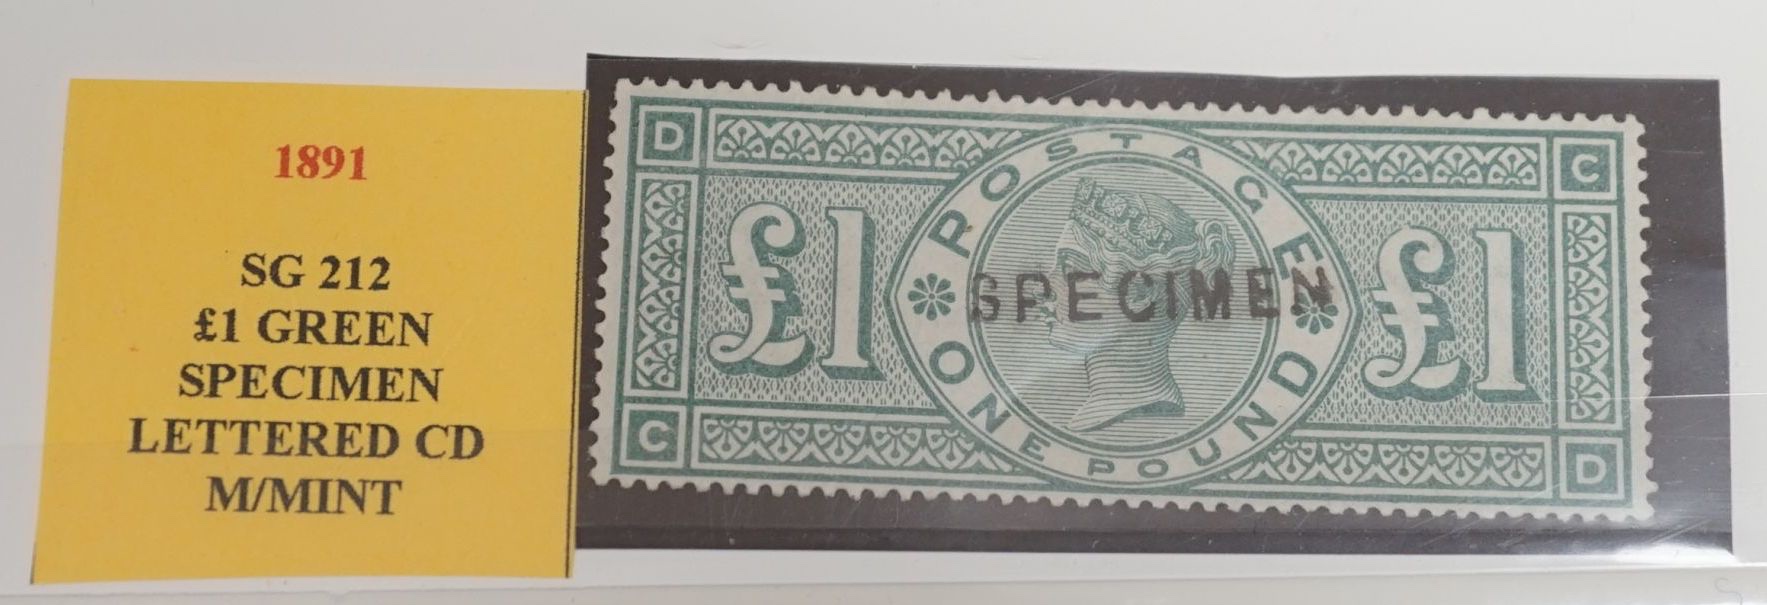 Stamps, Great Britain 1891 £1 green overprinted specimen fine mint